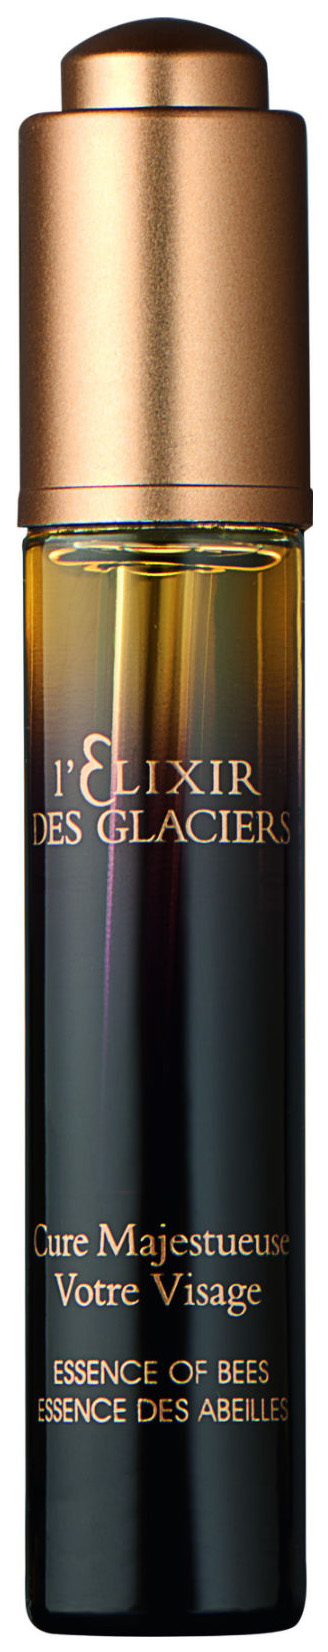 Масло для лица Valmont L'Elixir Des Glaciers Cure Majestueuse Votre Visage 12,5 мл